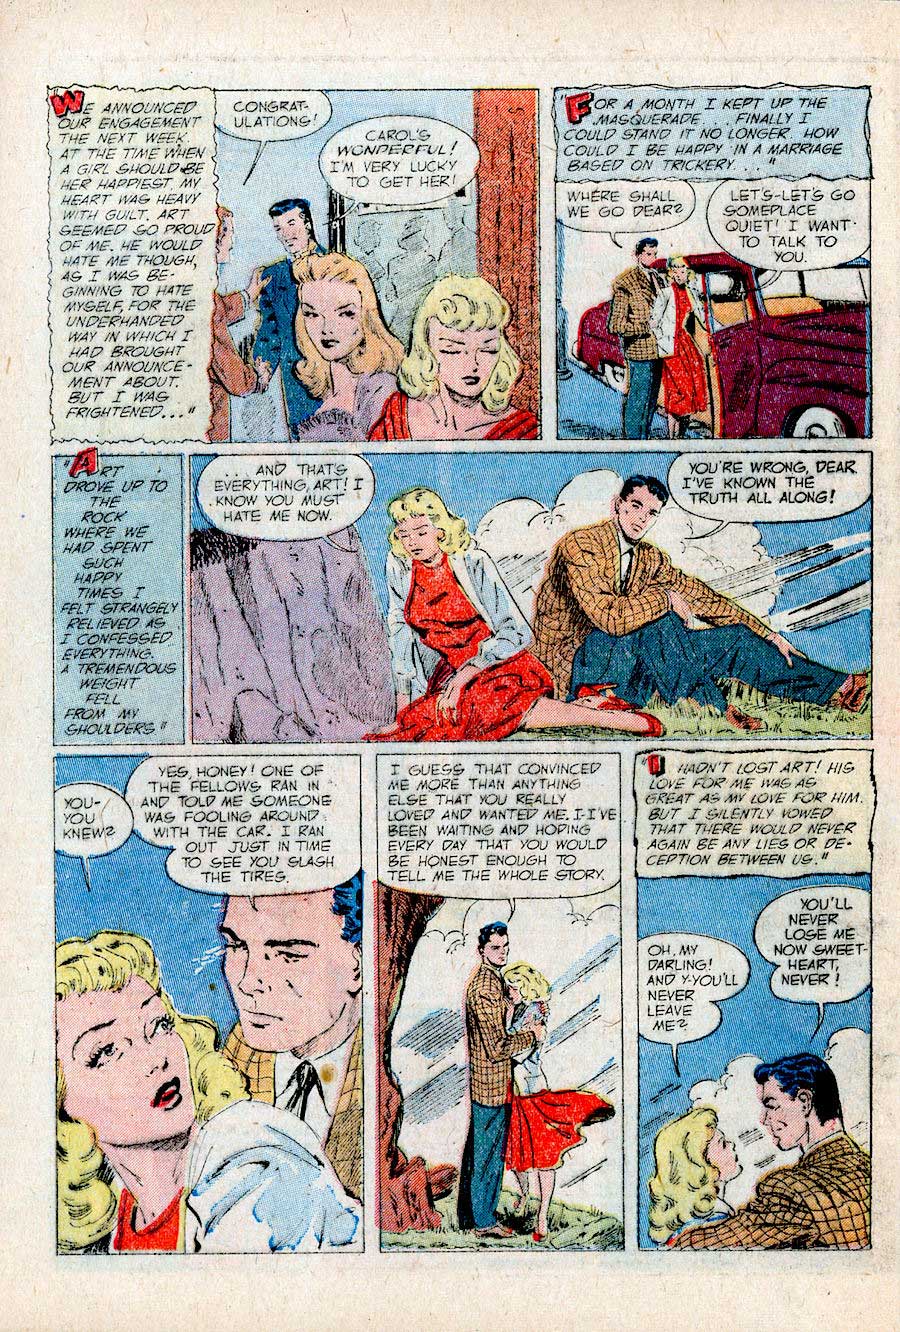 Pictorial Romances #16 st. john golden age 1950s romance comic book page art by Matt Baker